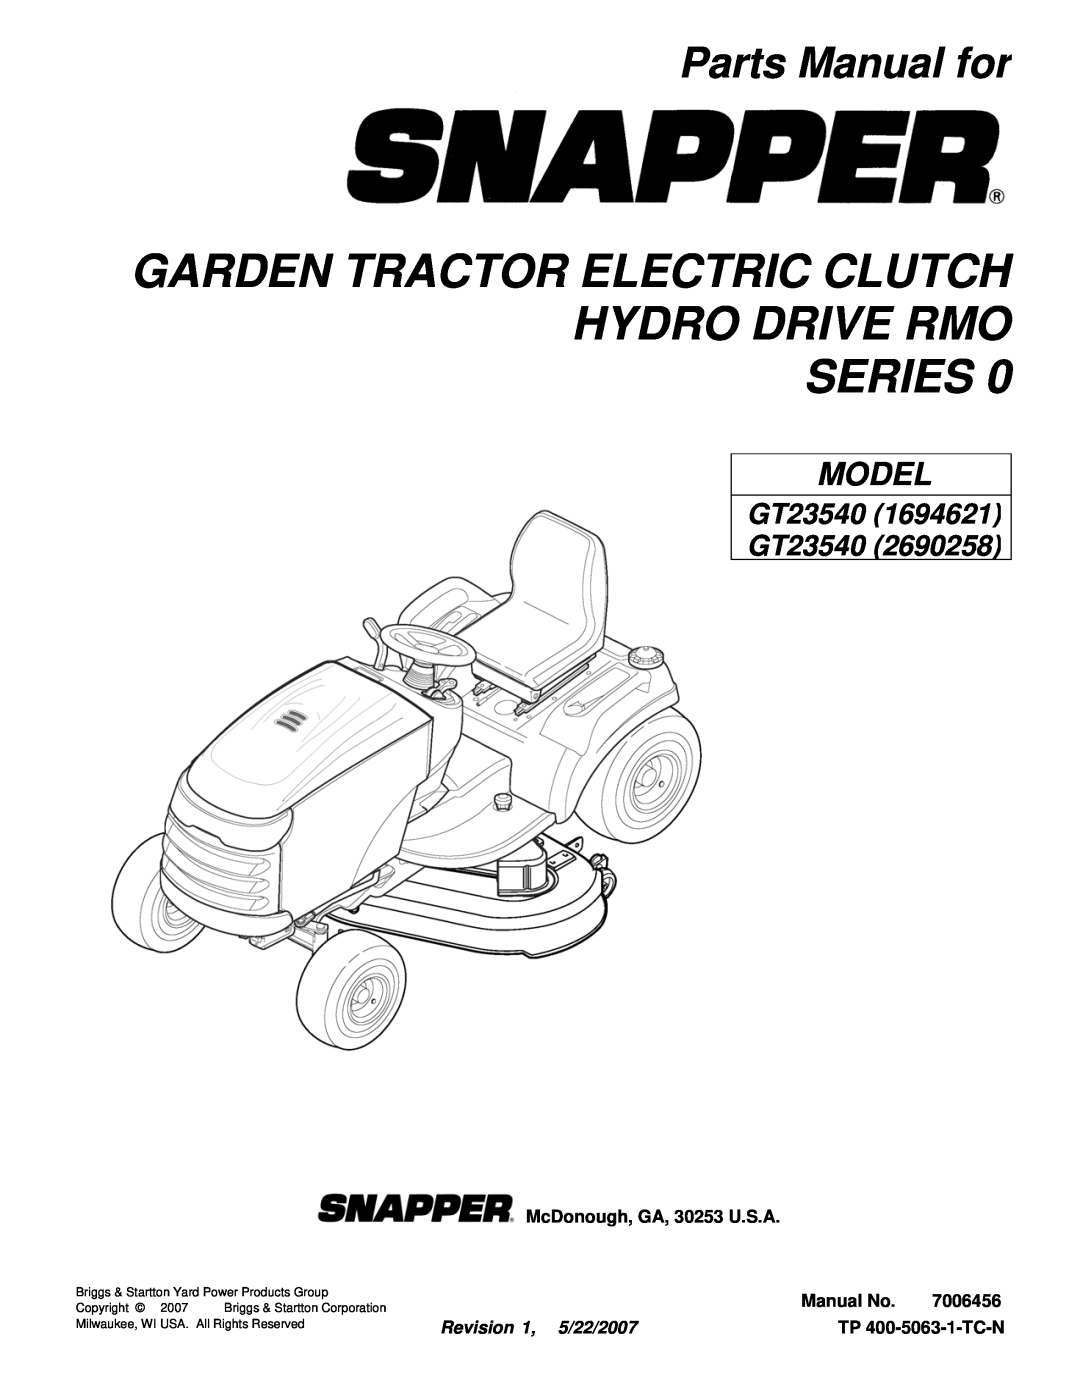 Briggs & Stratton GT23540 (2690258) manual Parts Manual for, Model, GT23540 GT23540, McDonough, GA, 30253 U.S.A, Manual No 